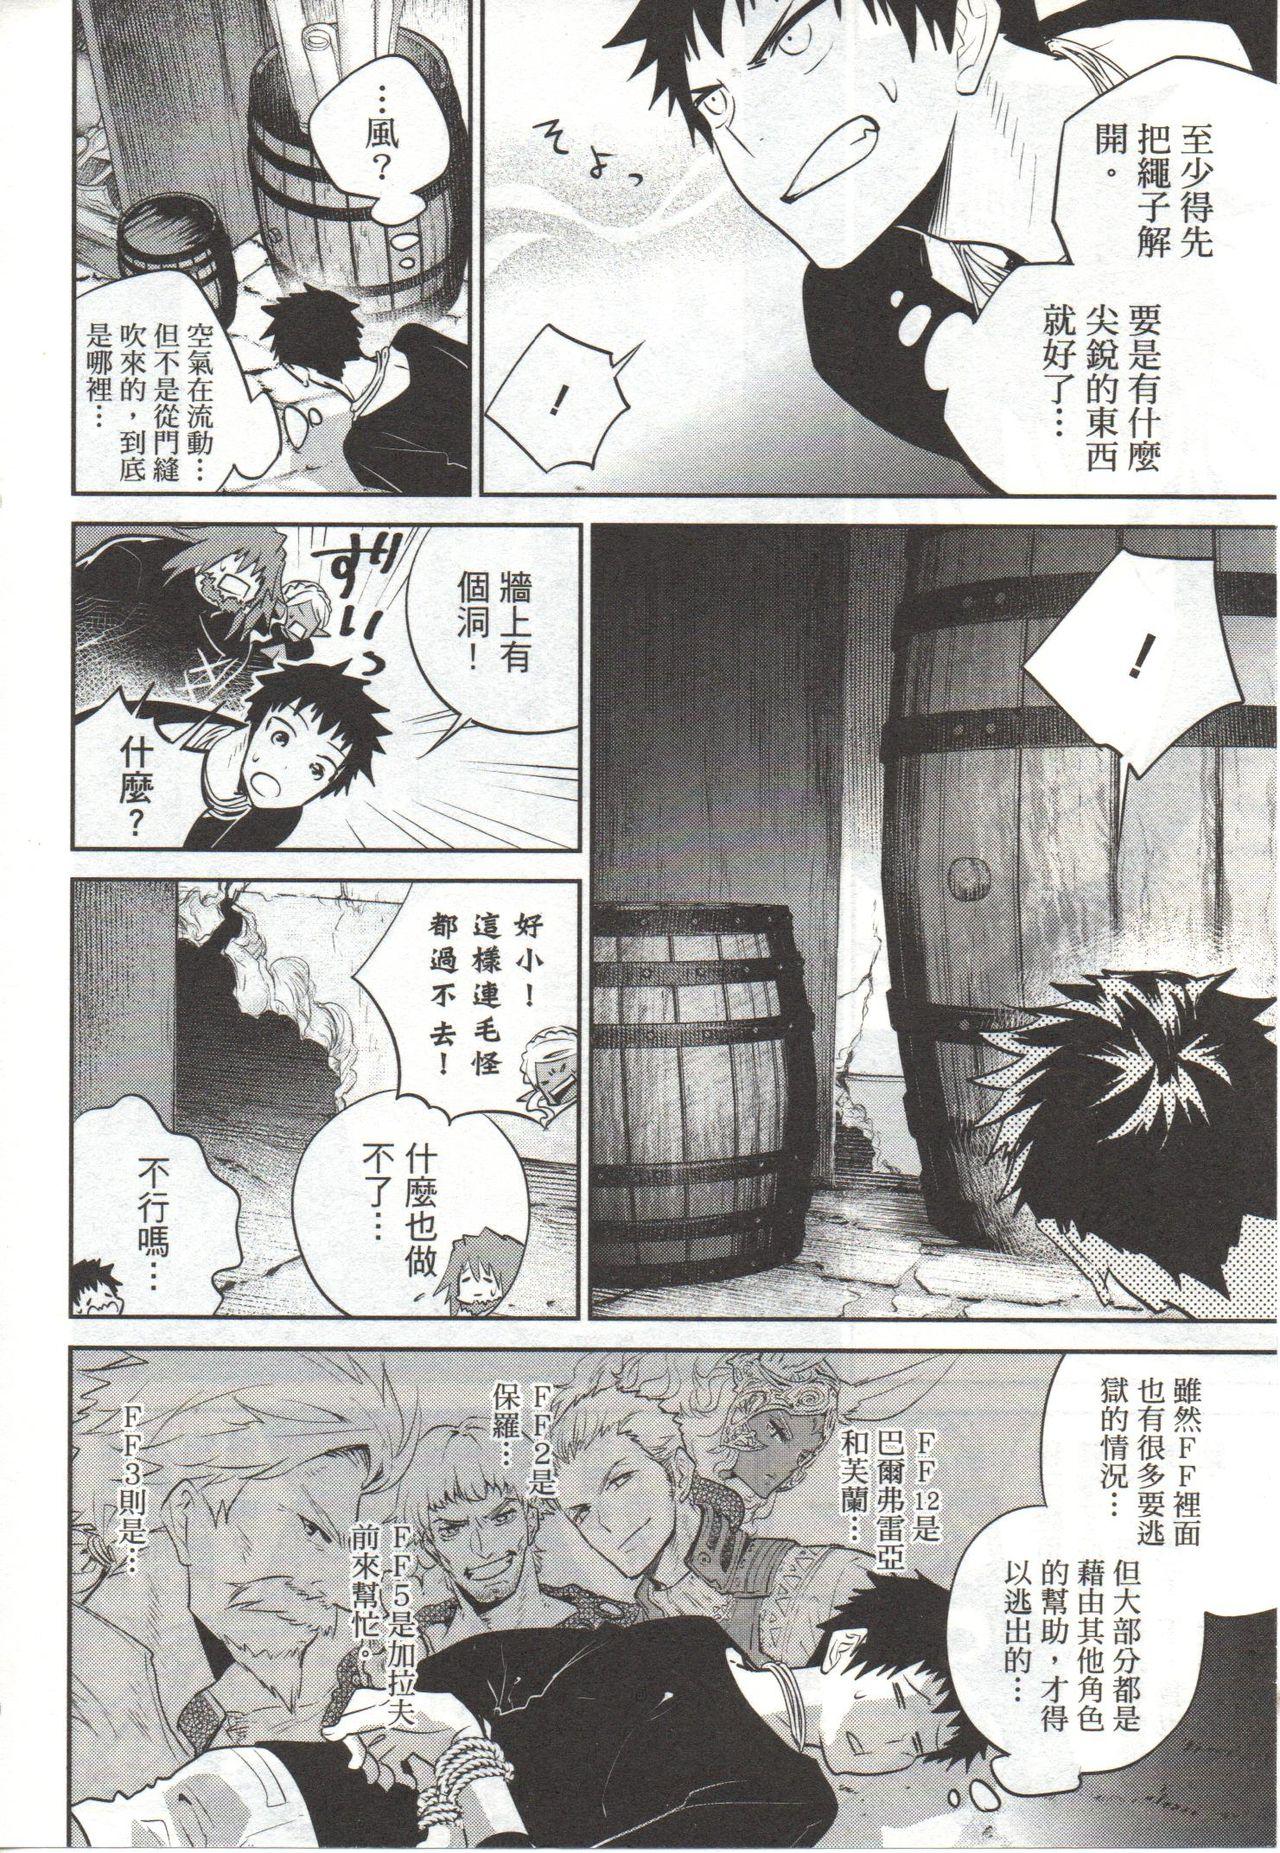 Ex Gf Final Fantasy Lost Stranger Vol.03 - Final fantasy Screaming - Page 11